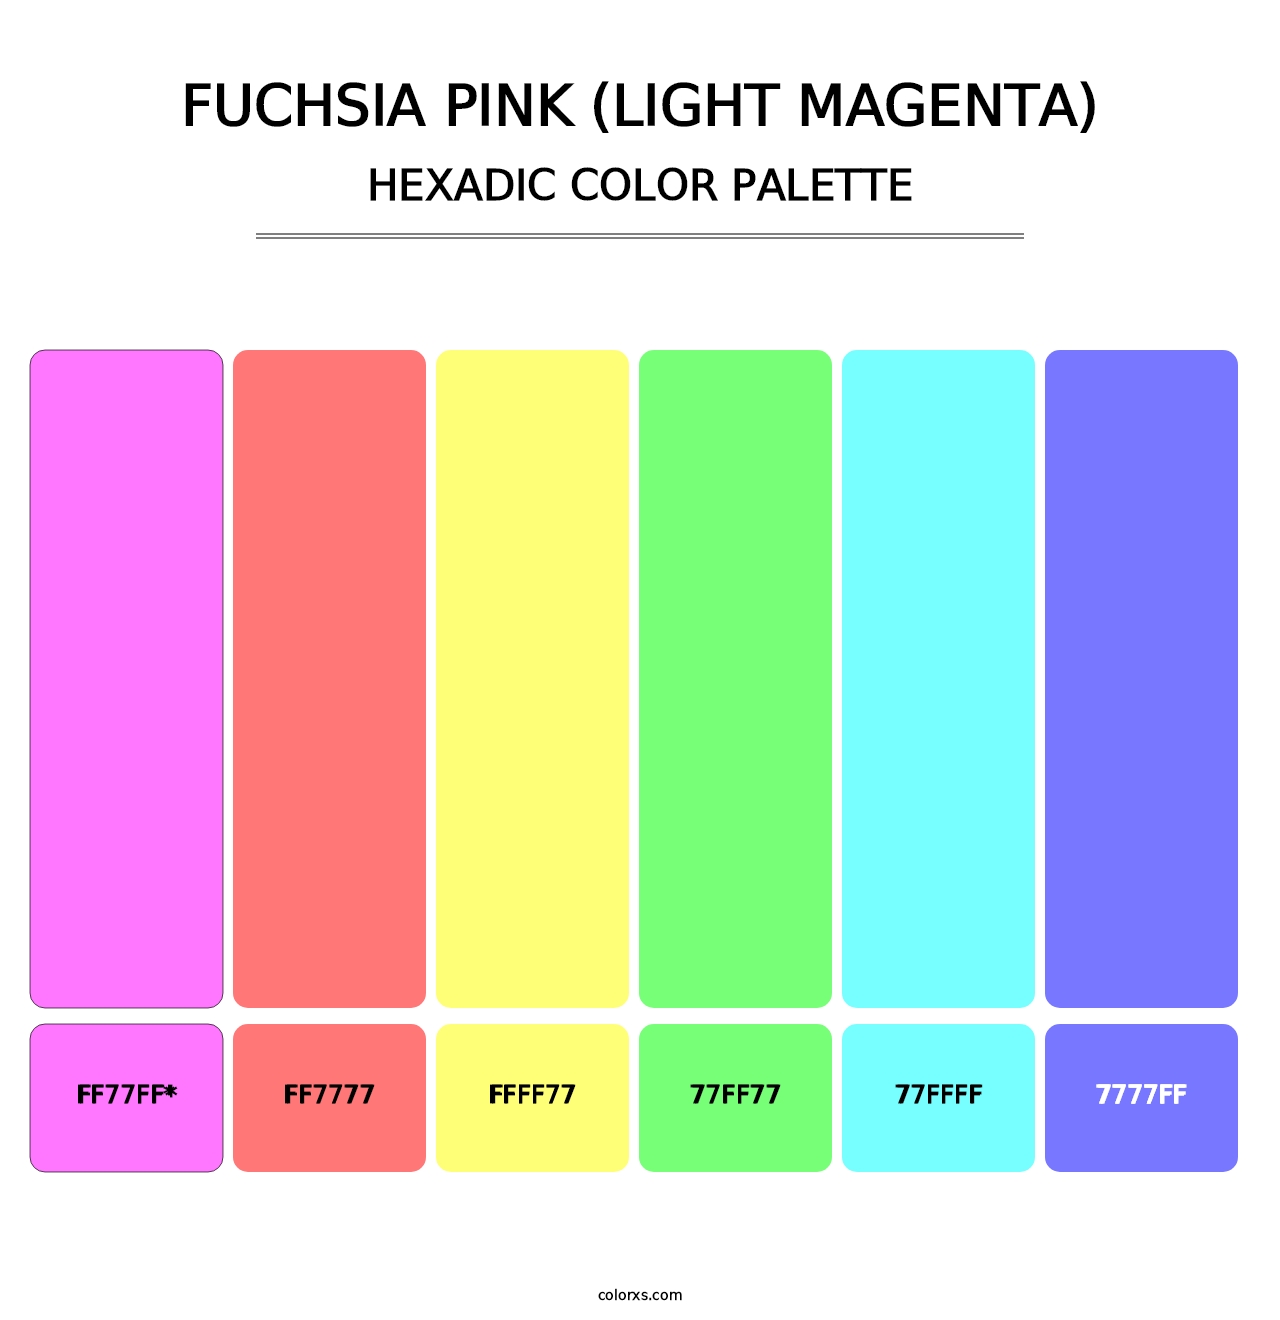 Fuchsia Pink (Light Magenta) - Hexadic Color Palette